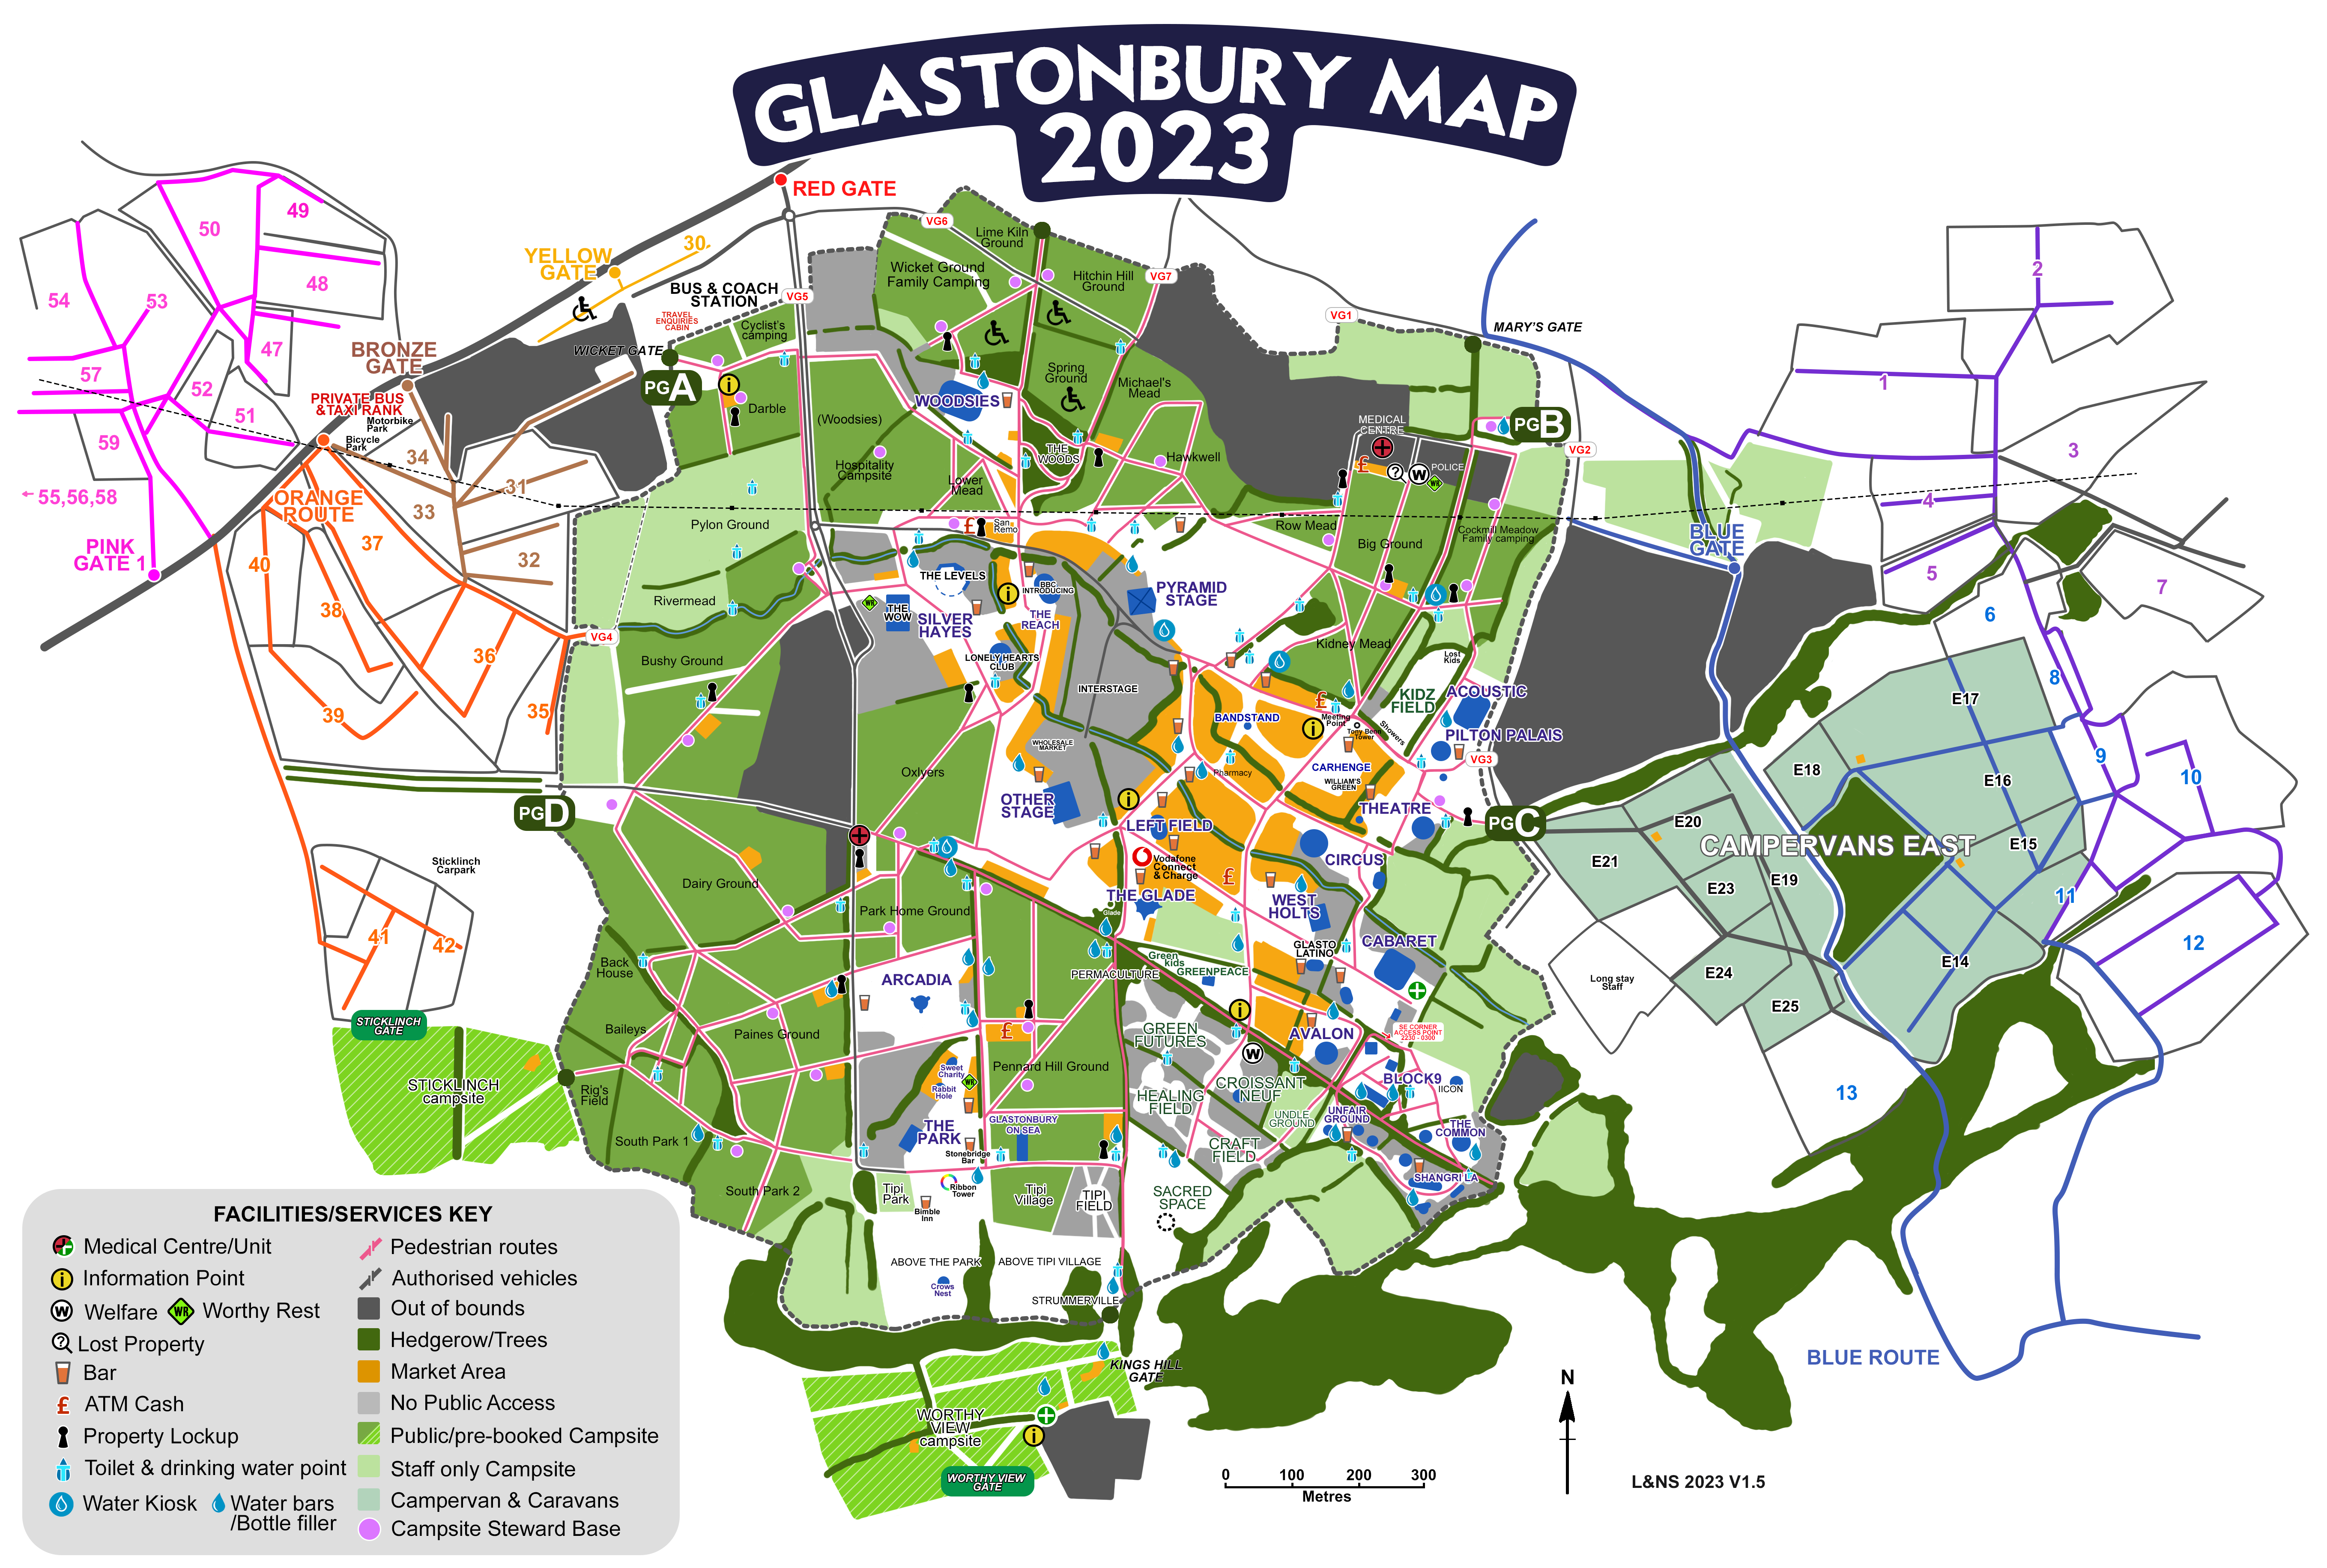 Glastonbury 2023 Map